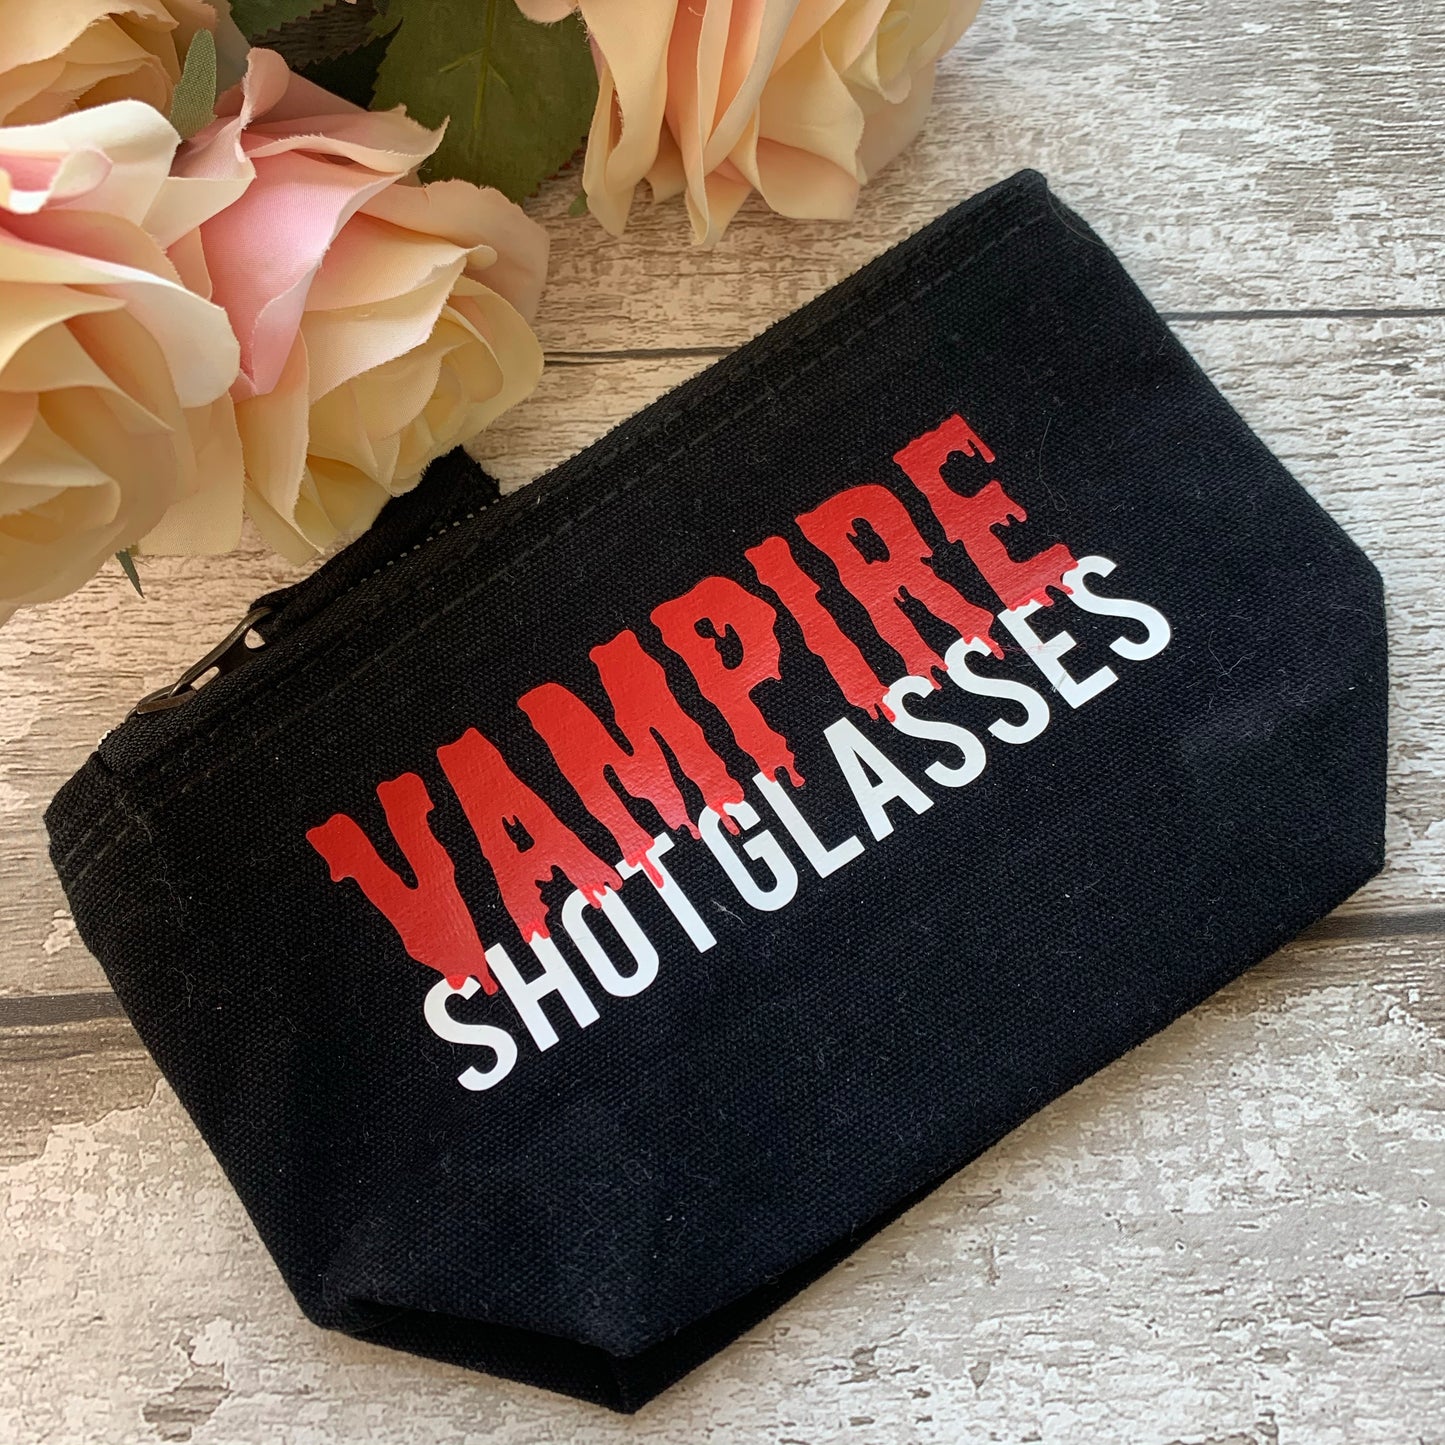 Vampire Shotglasses - Tampon, pad, sanitary bag / Period Pouch